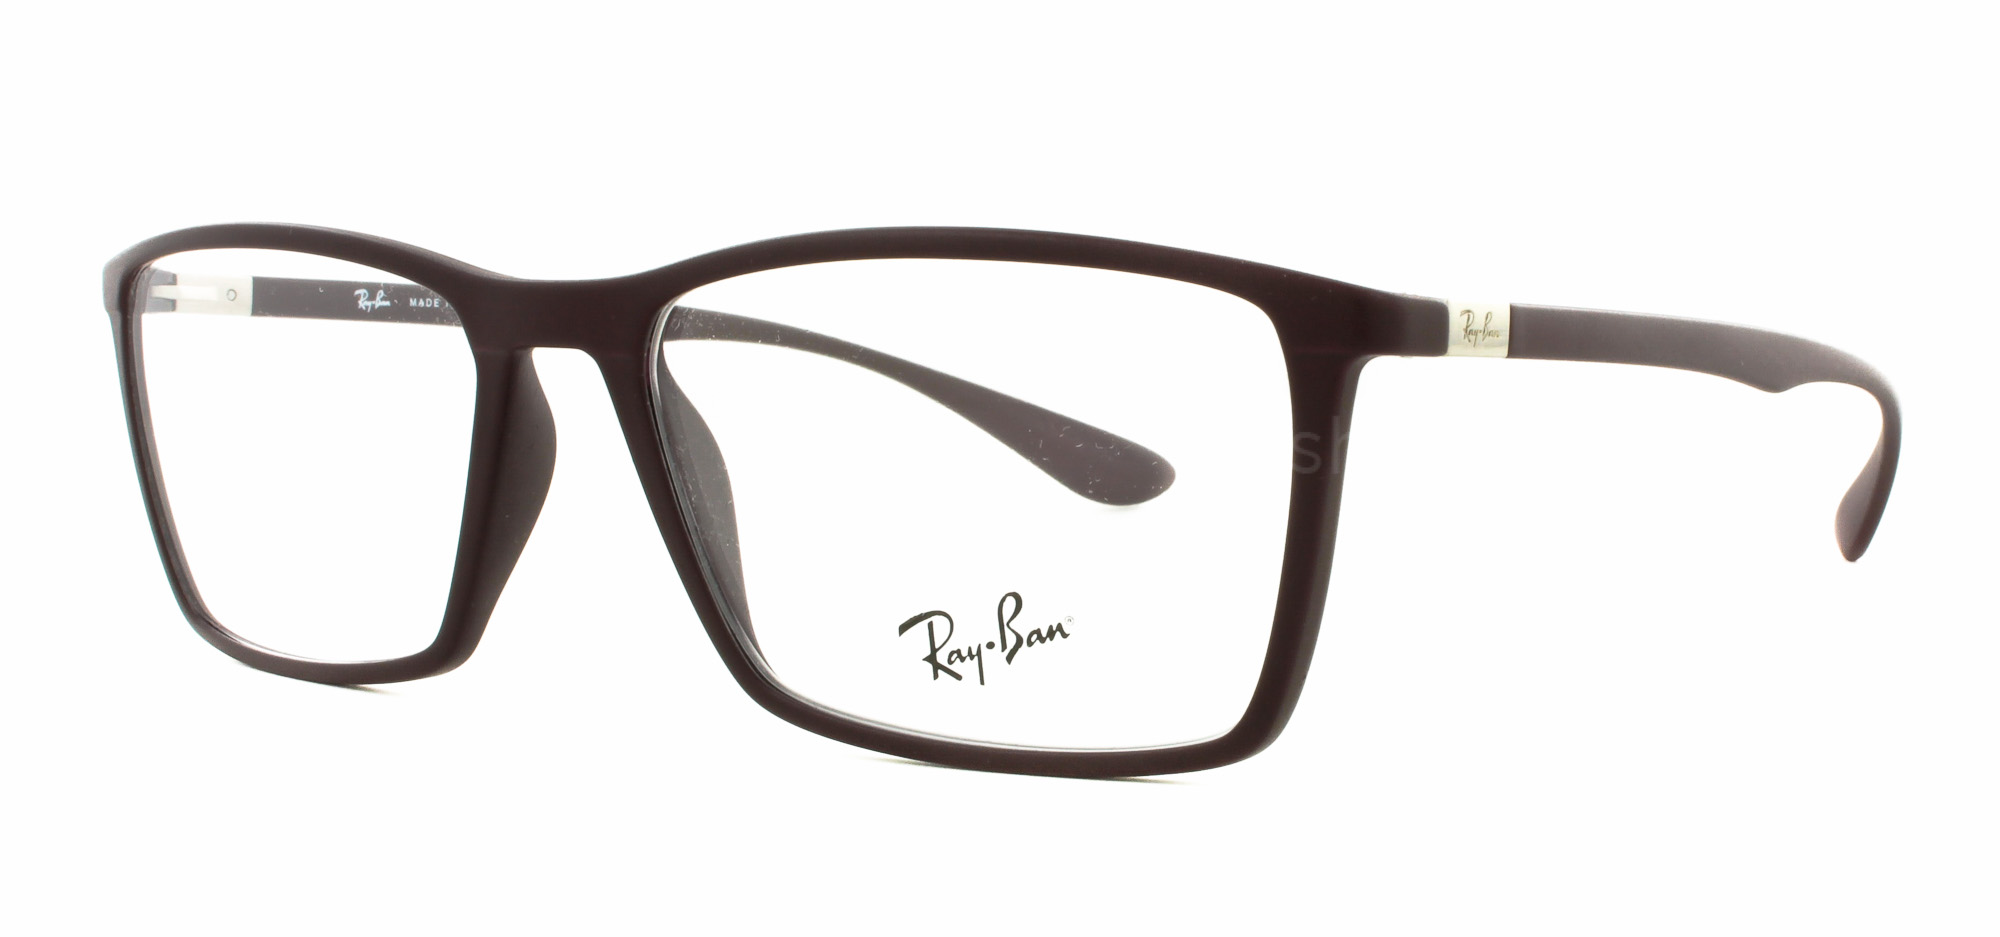 Ray Ban 7049 Eyeglasses